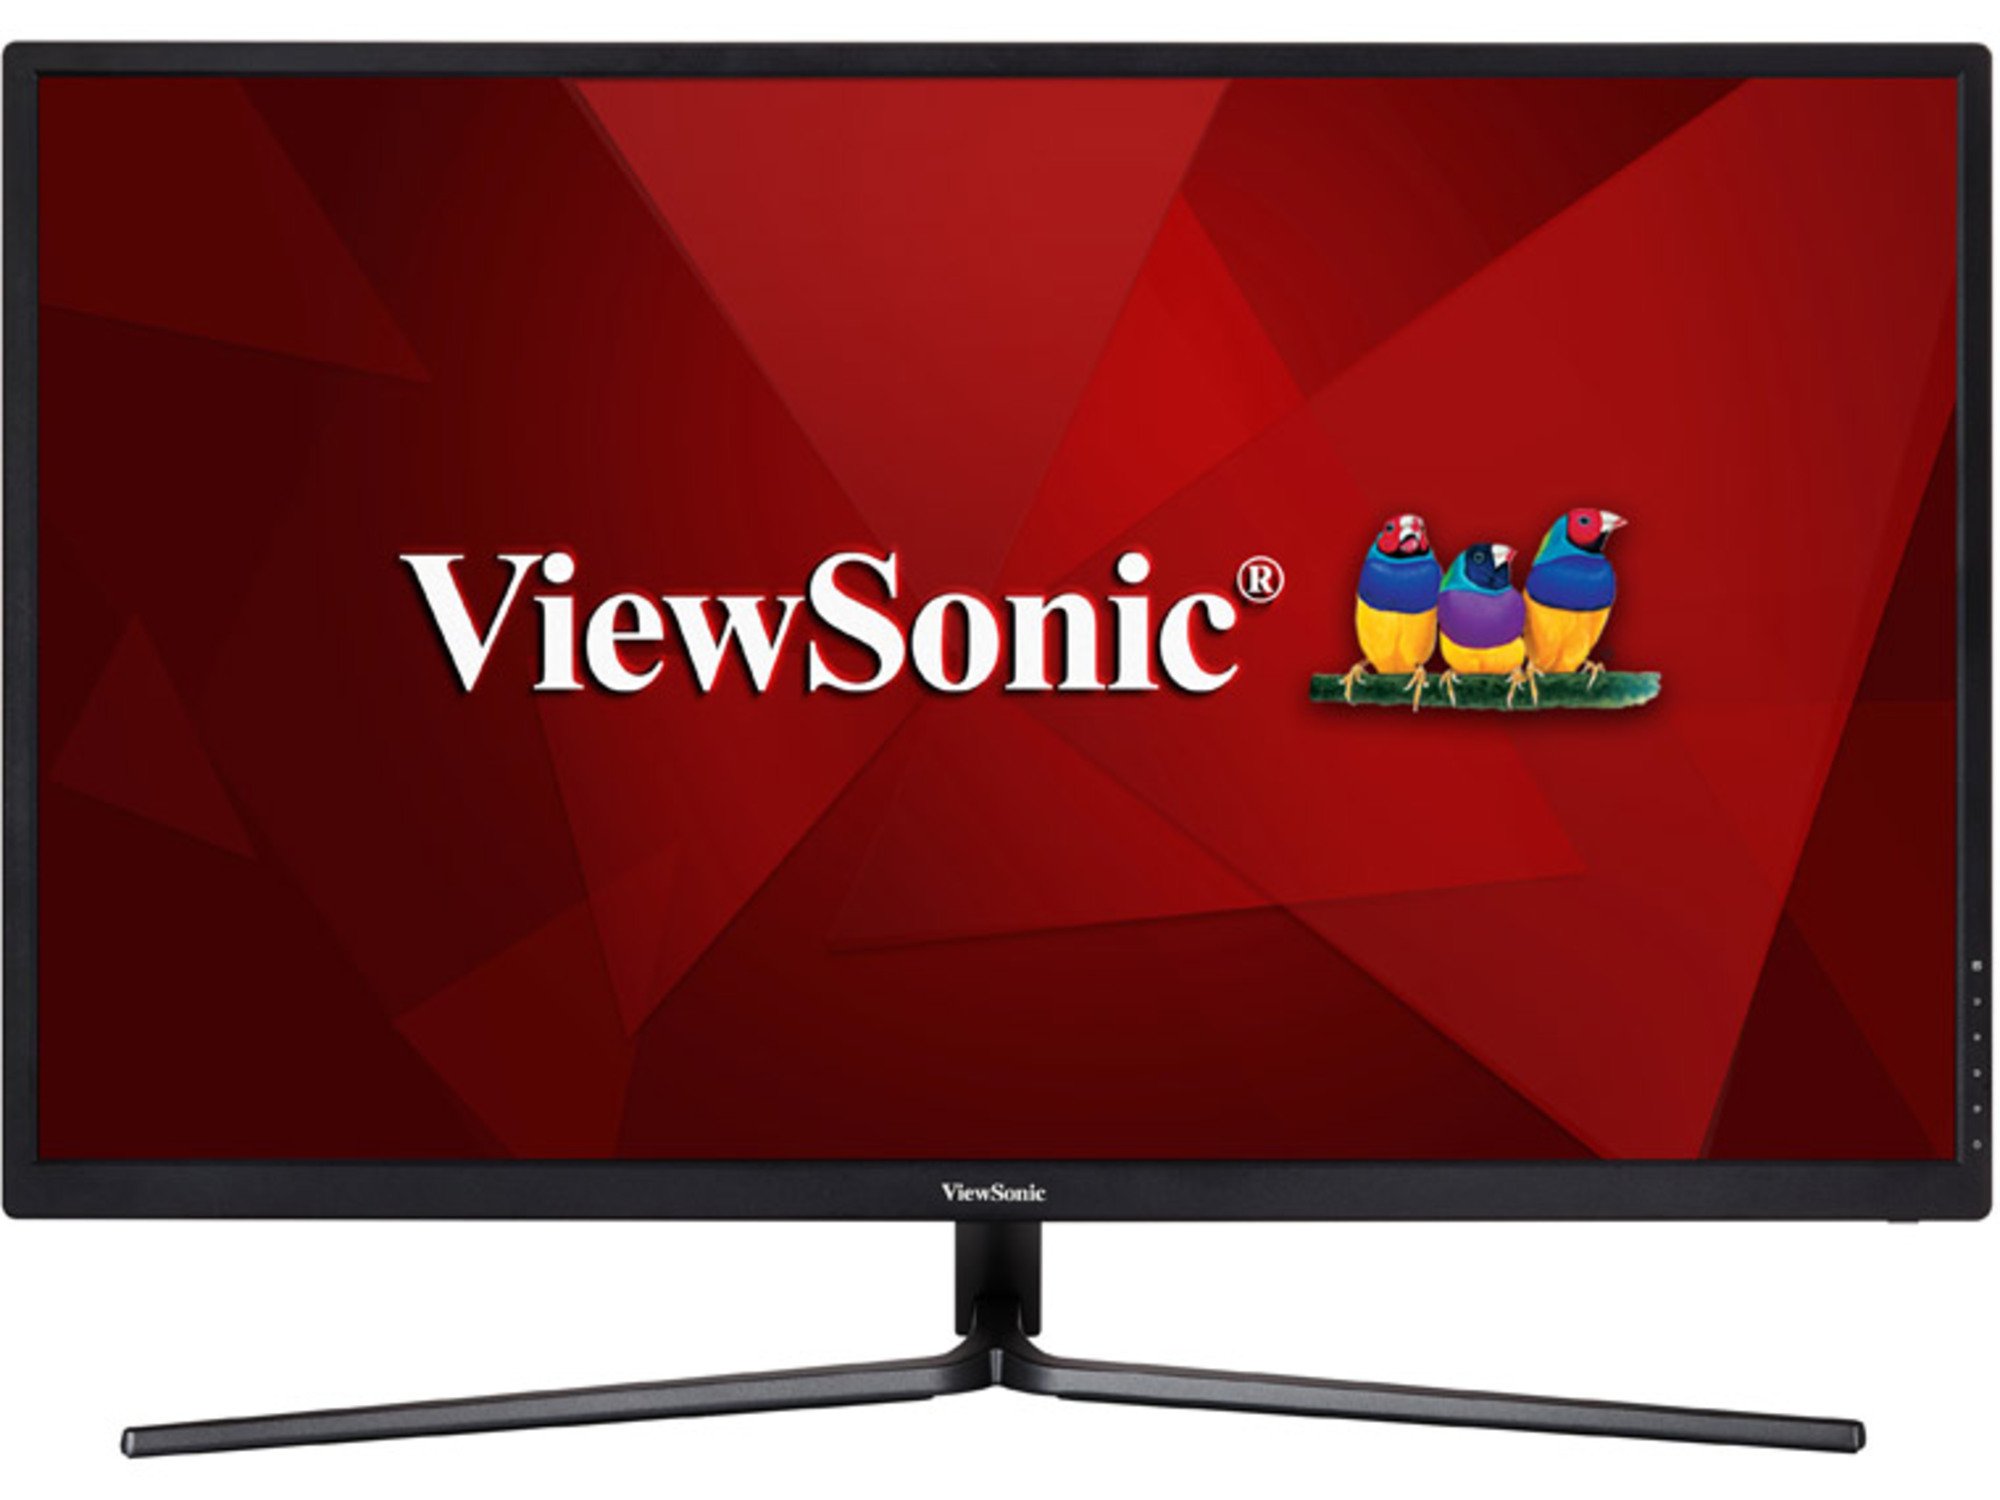 Viewsonic Vx3211-4k-mhd 32 va 4k freesync lcd monitor